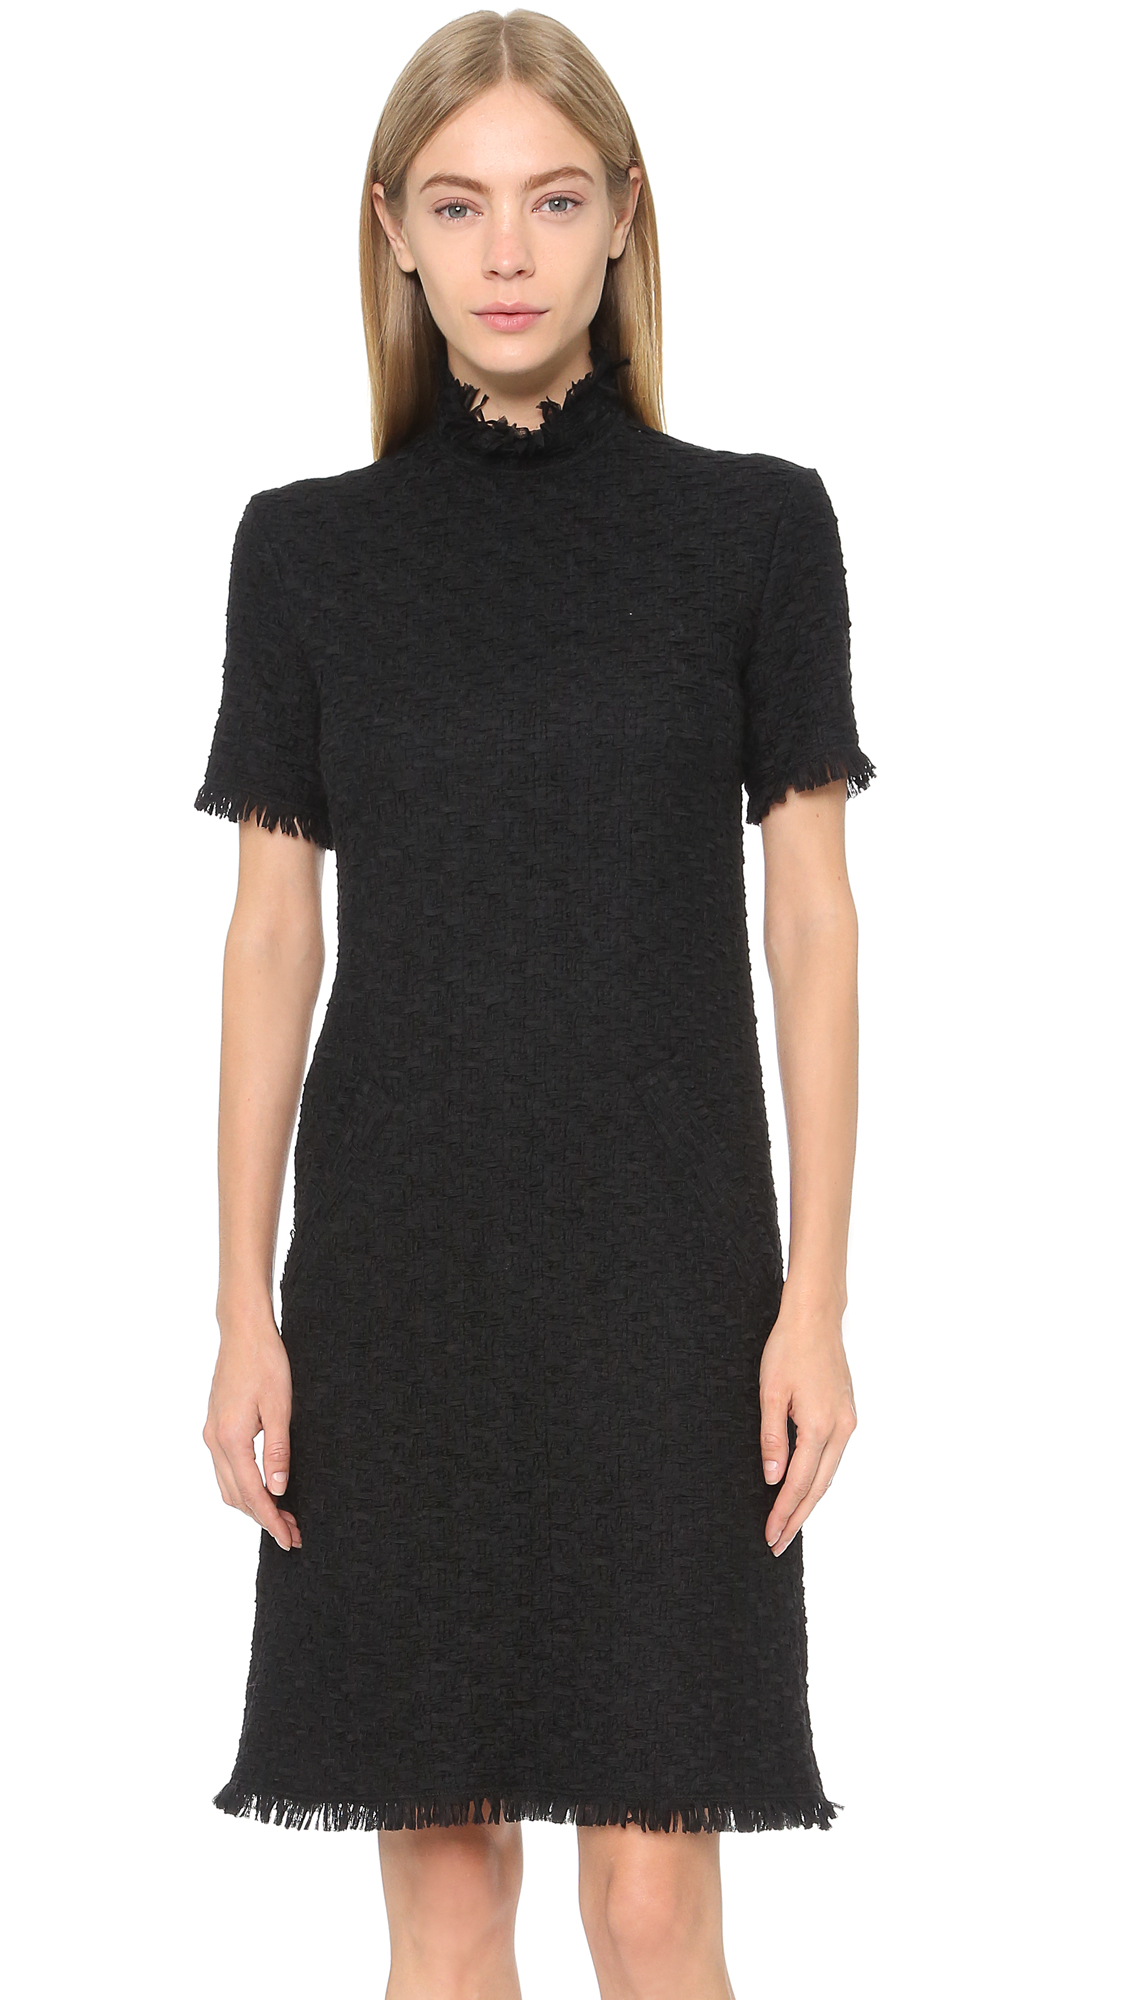 Lyst - Nina ricci Short Sleeve Tweed Dress - Noir in Black